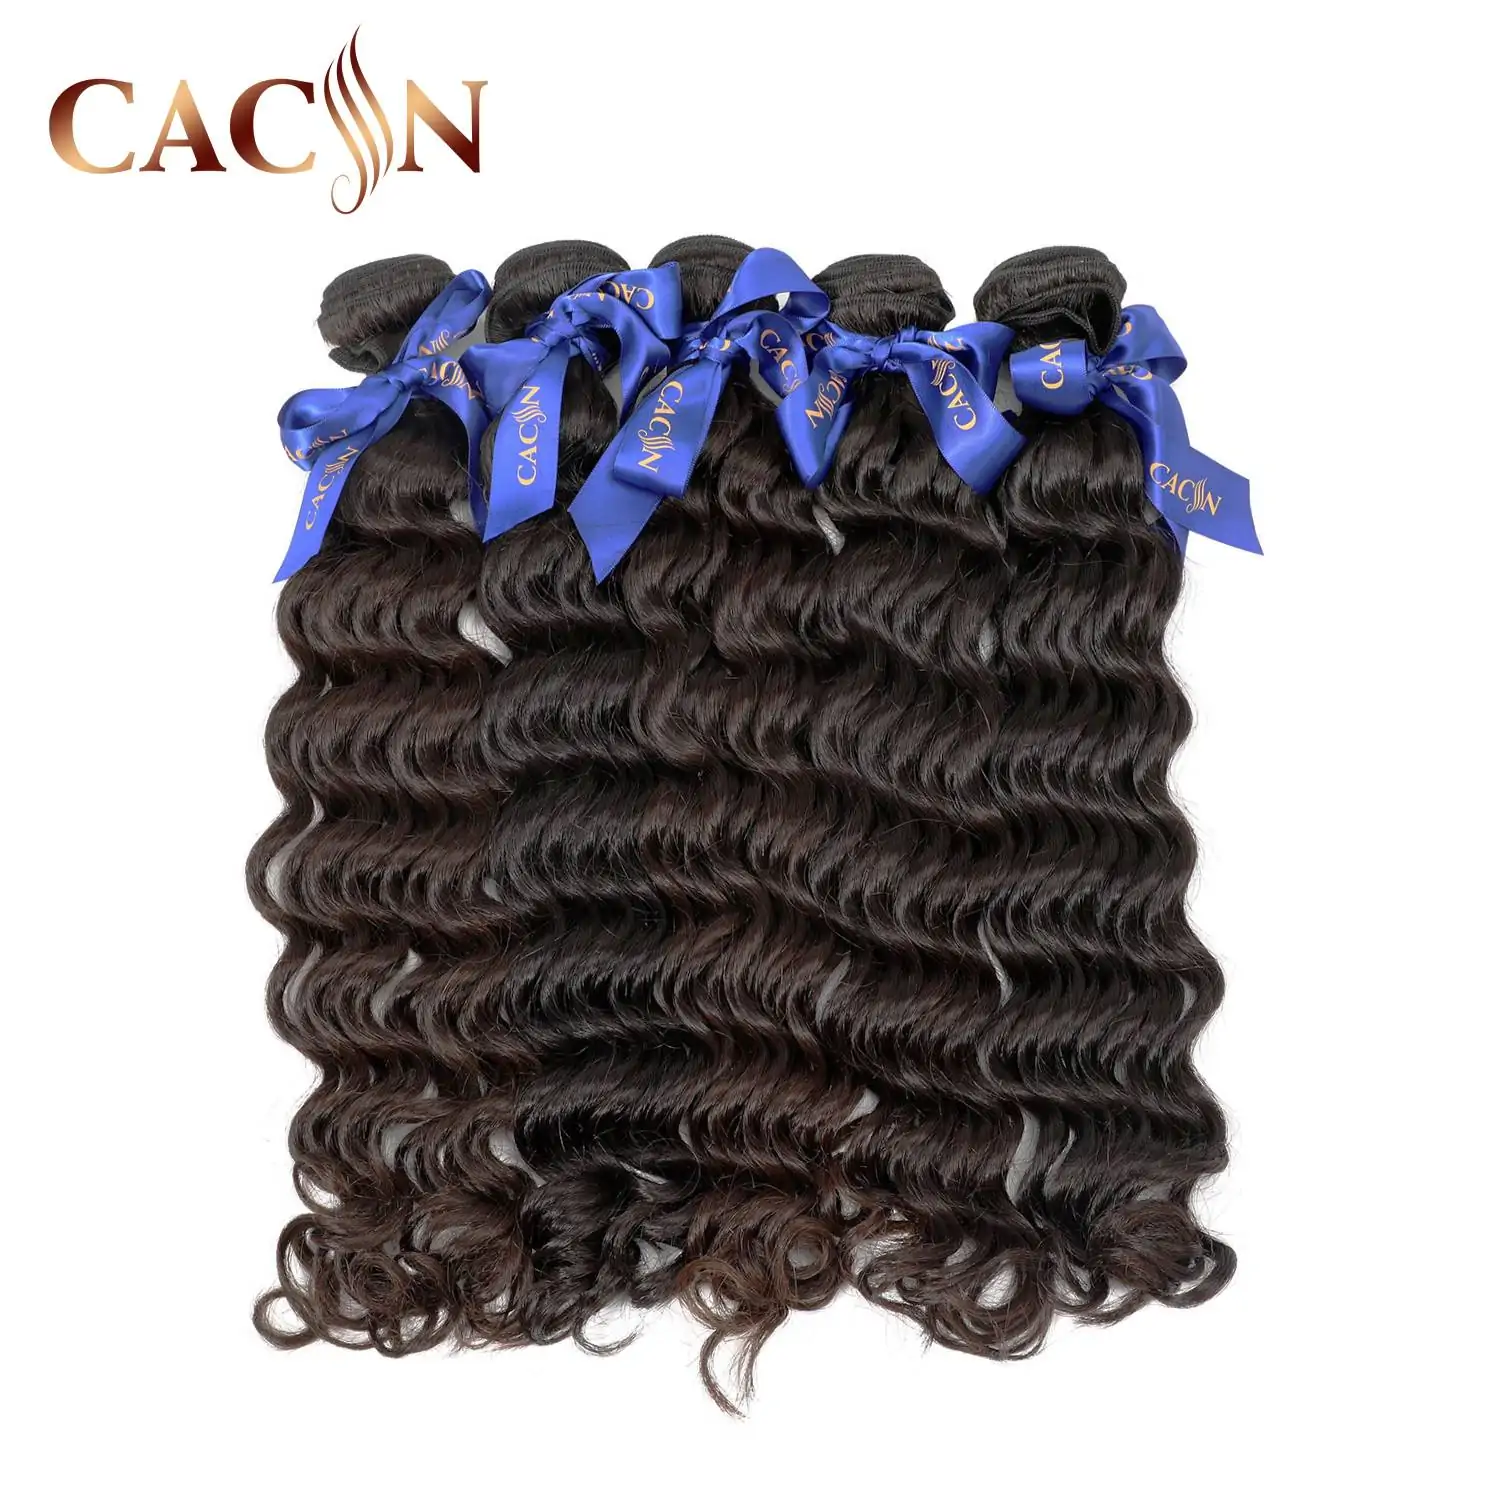 Raw virgin Brazilian deep wave hair bundles 1pcs, raw hair weave, free shipping